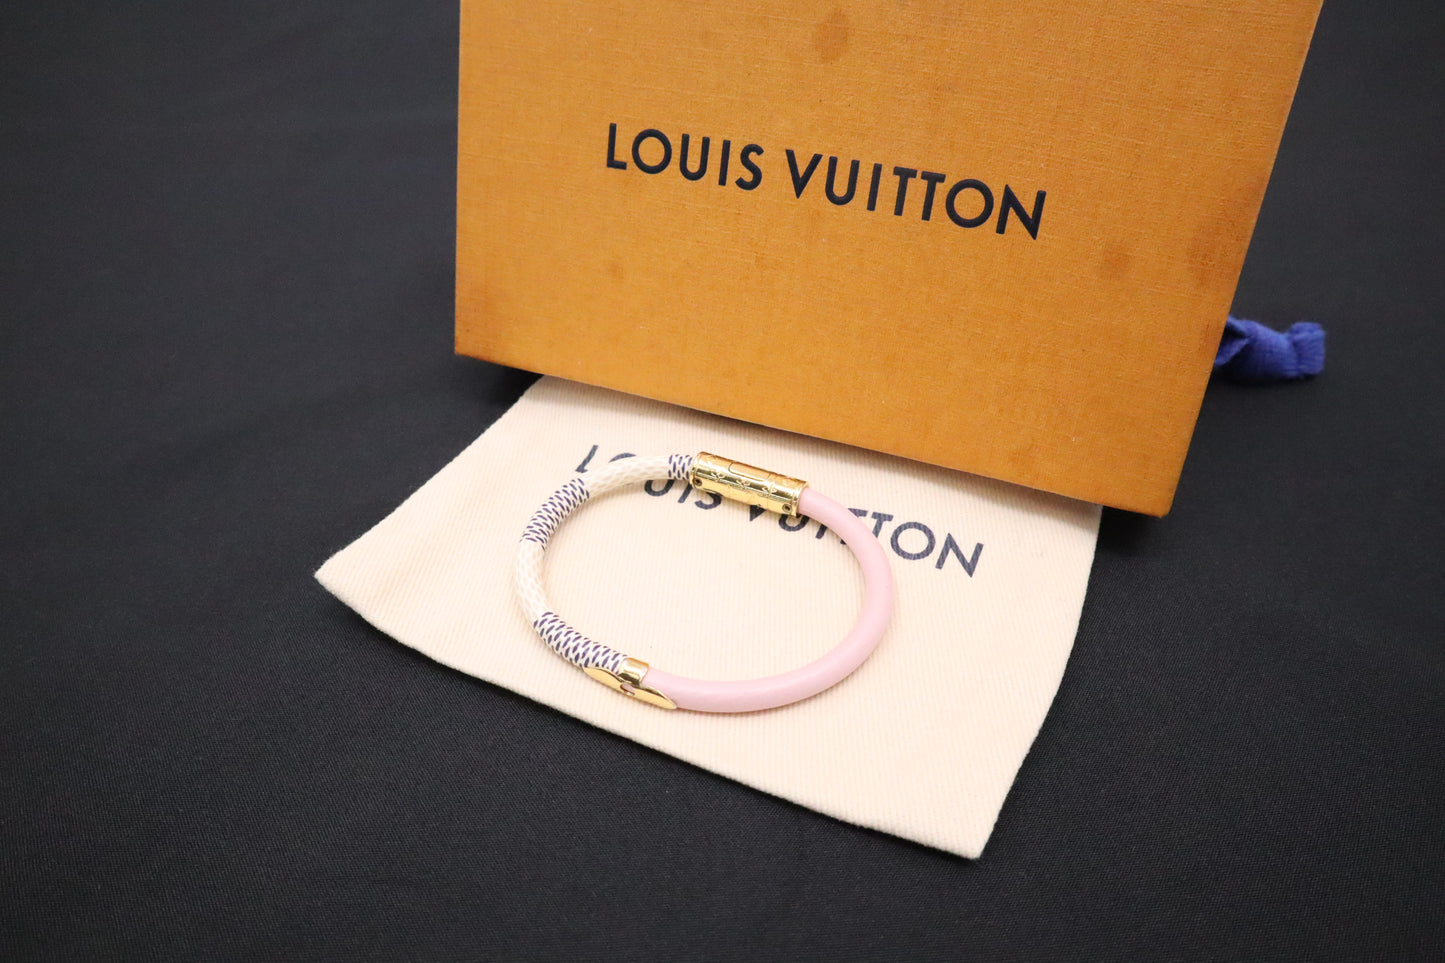 Louis Vuitton Daily Confidential Bracelet in Damier Azur and Pink Canvas